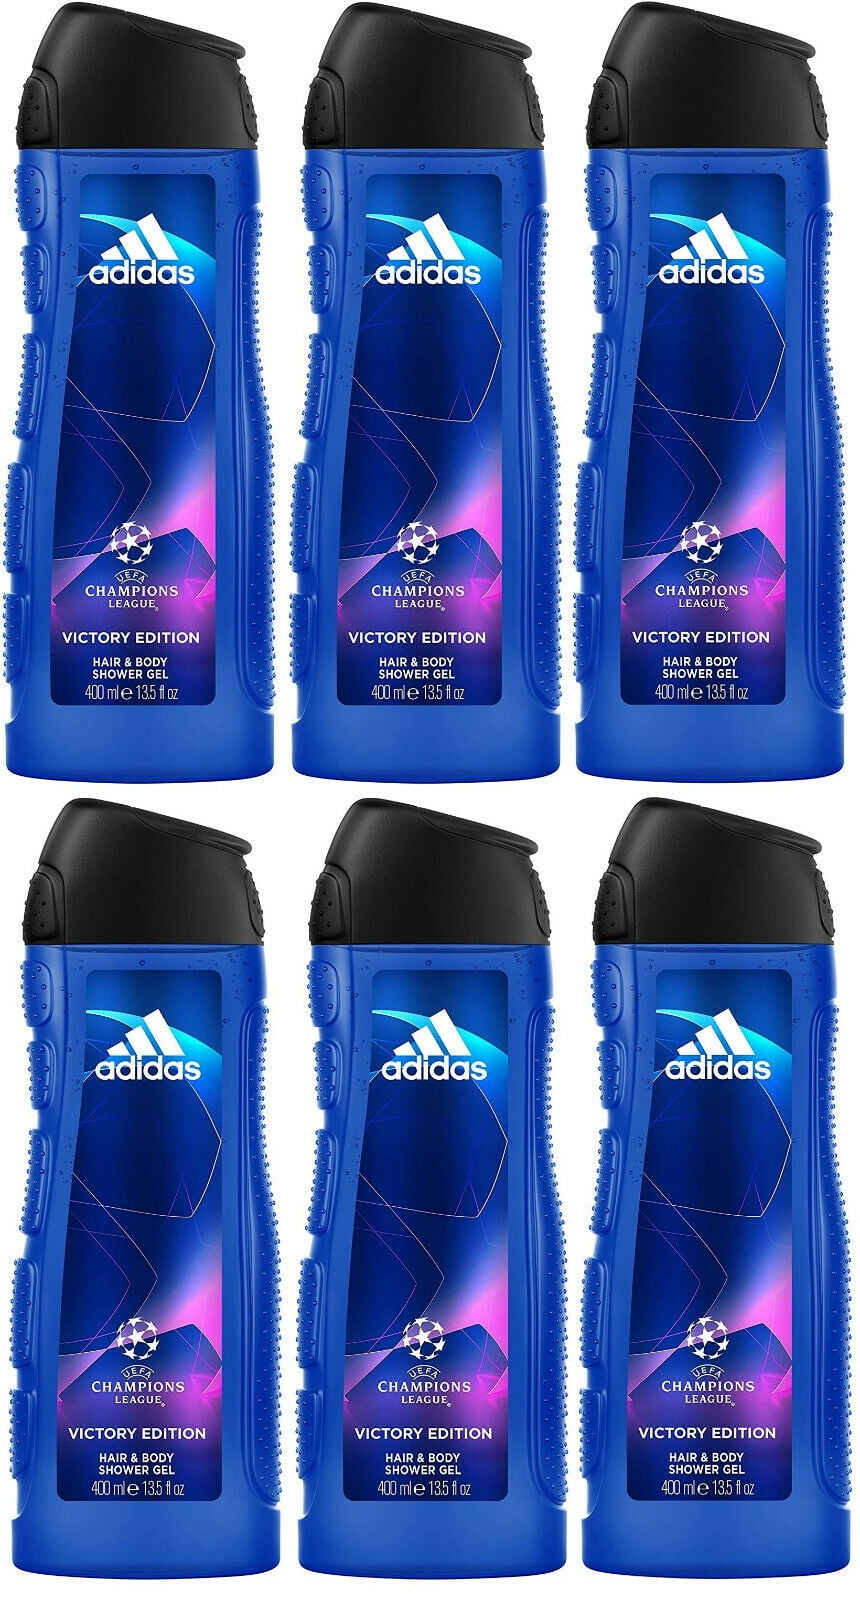 adidas champions league shower gel